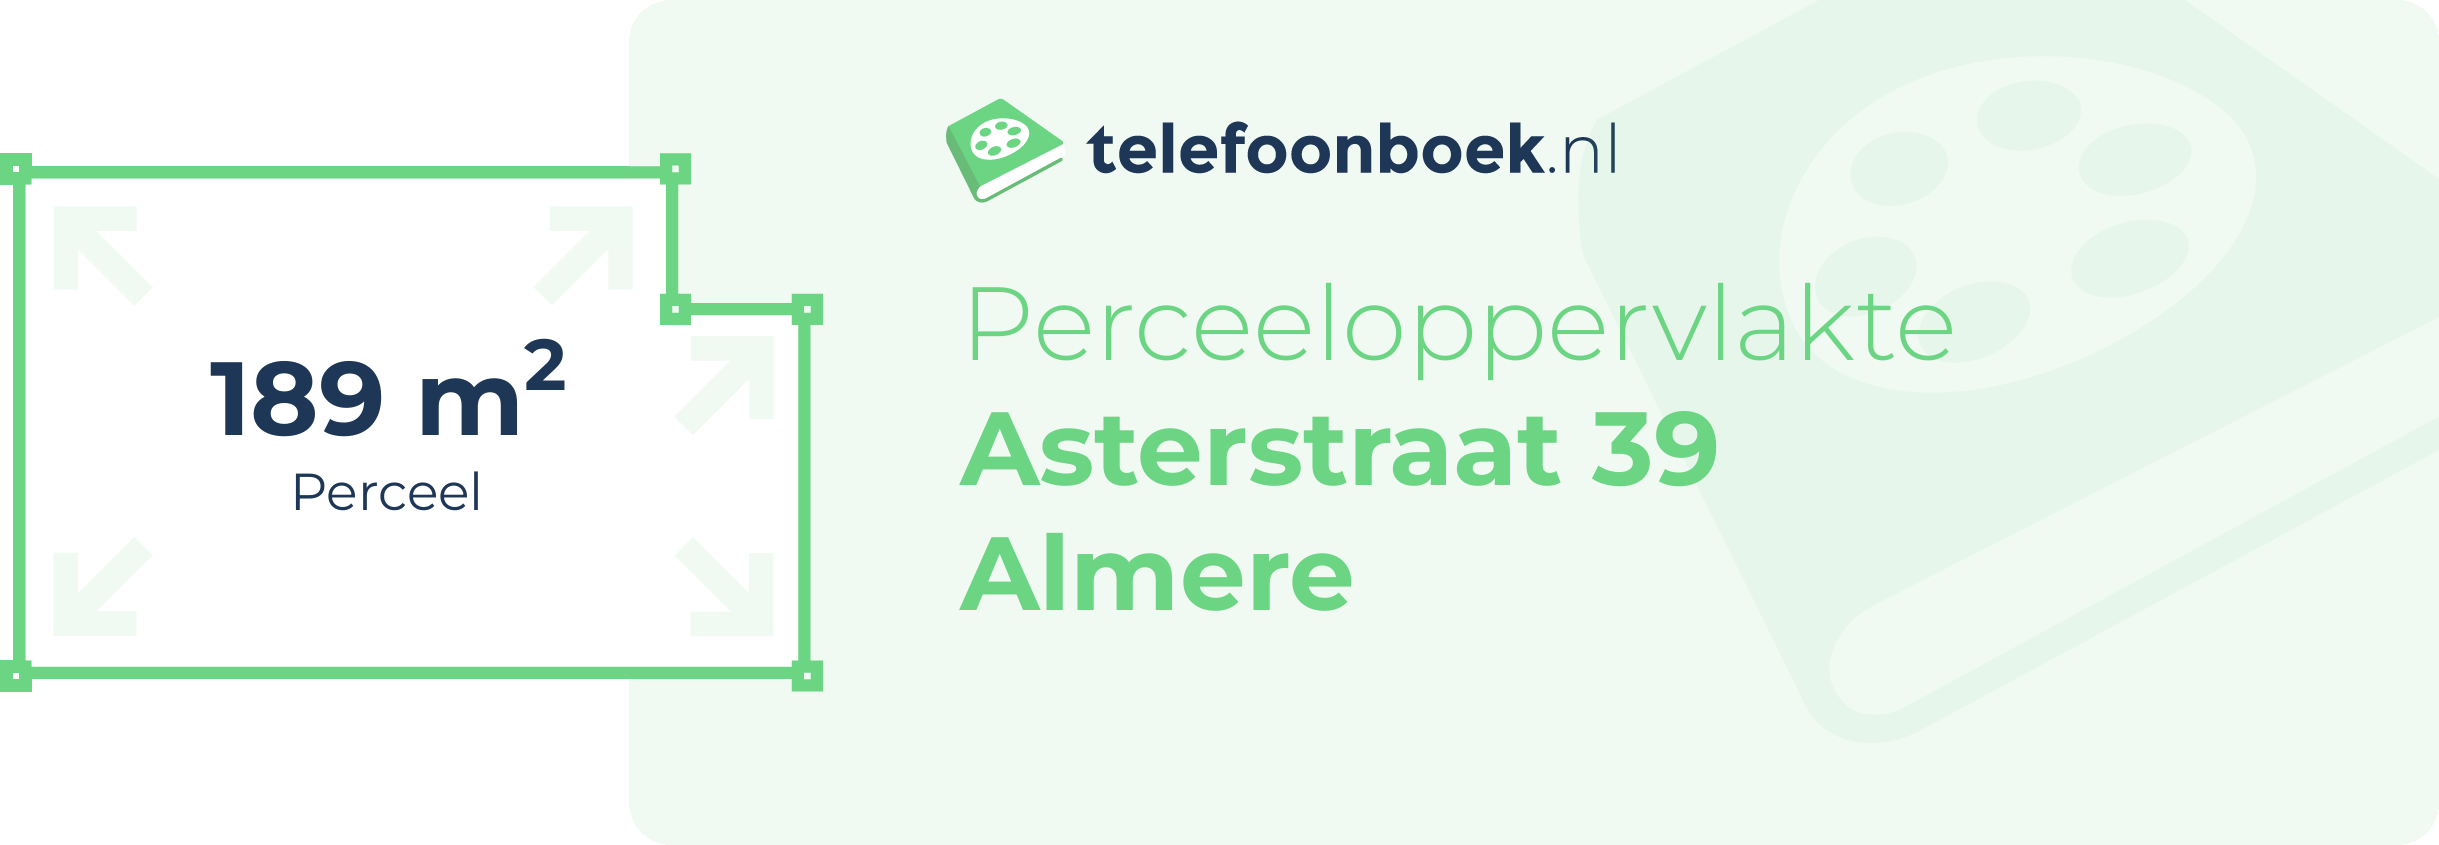 Perceeloppervlakte Asterstraat 39 Almere